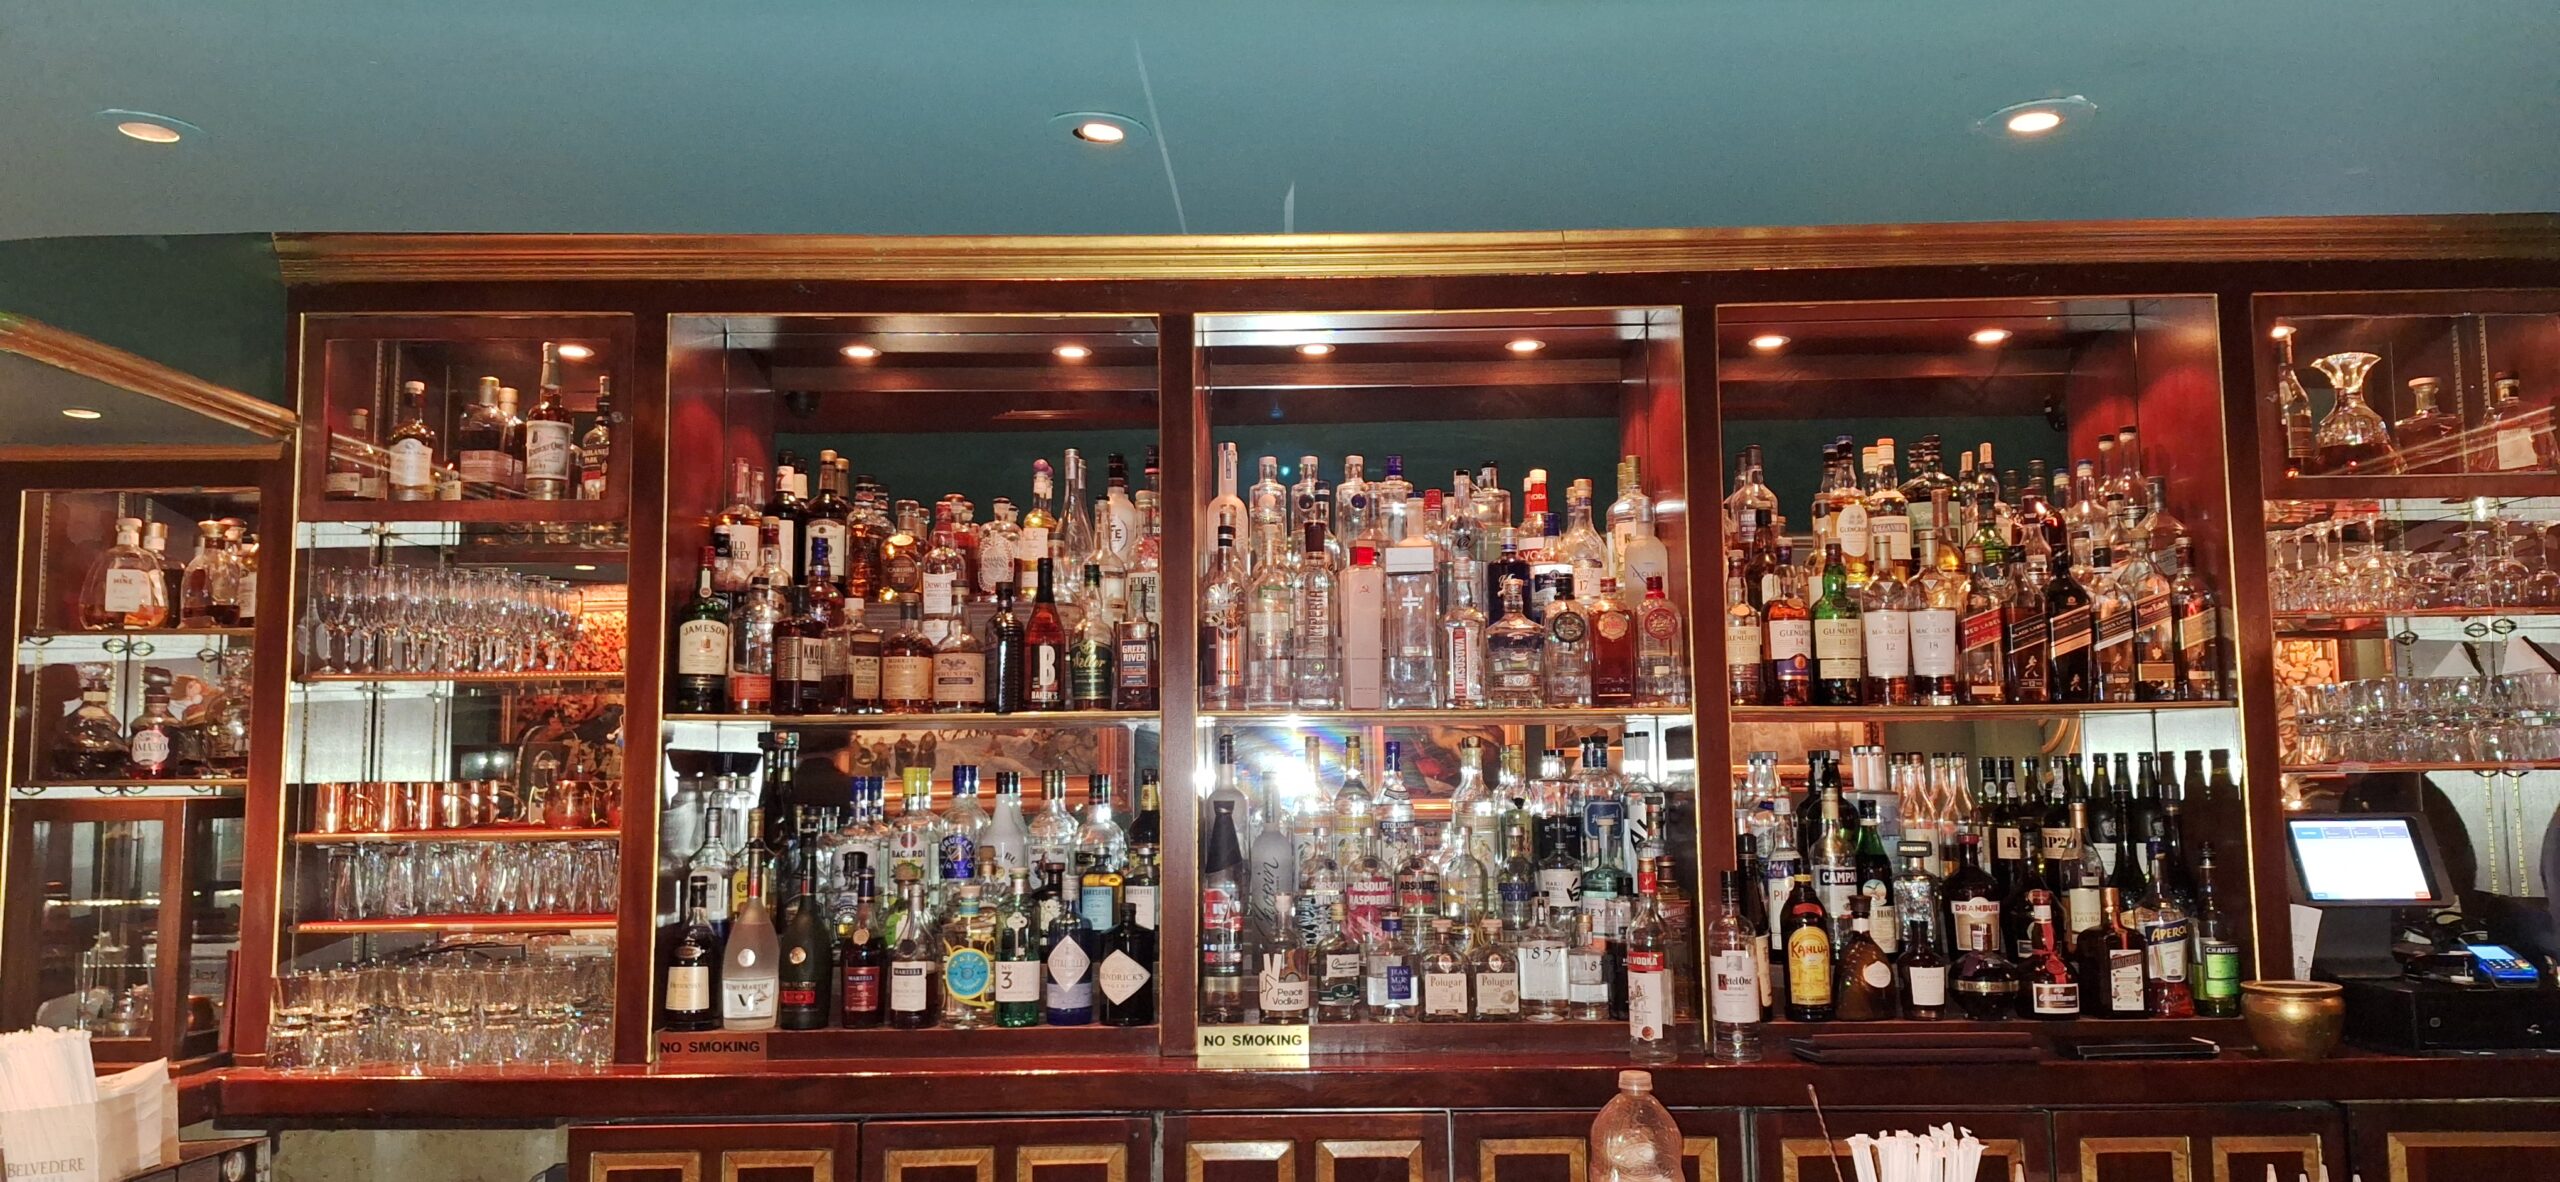 a shelf of liquor bottles